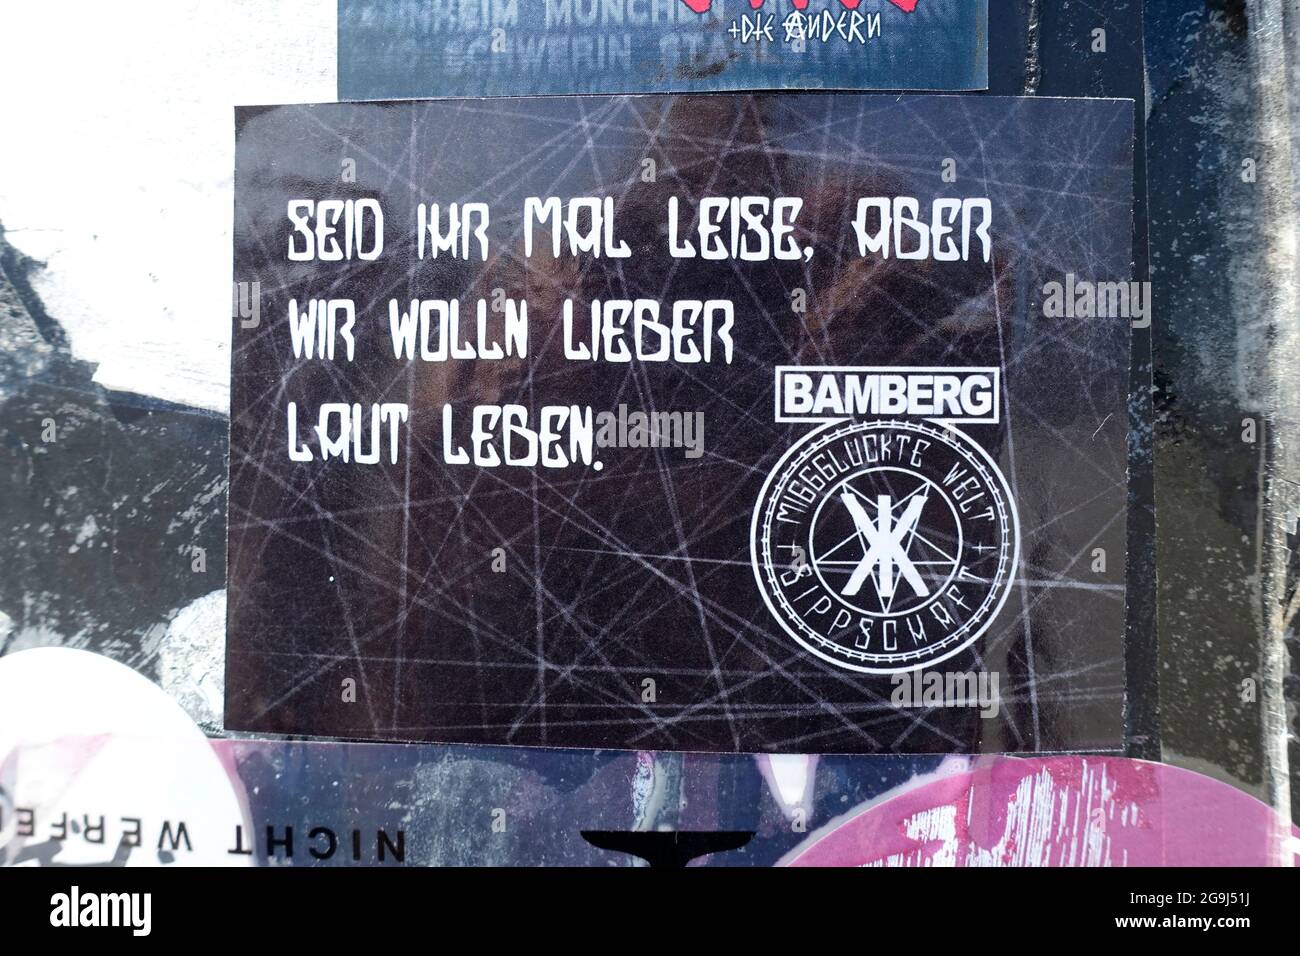 Missglückte Welt Sippschaft Bamberg, sticker, Germany Stock Photo